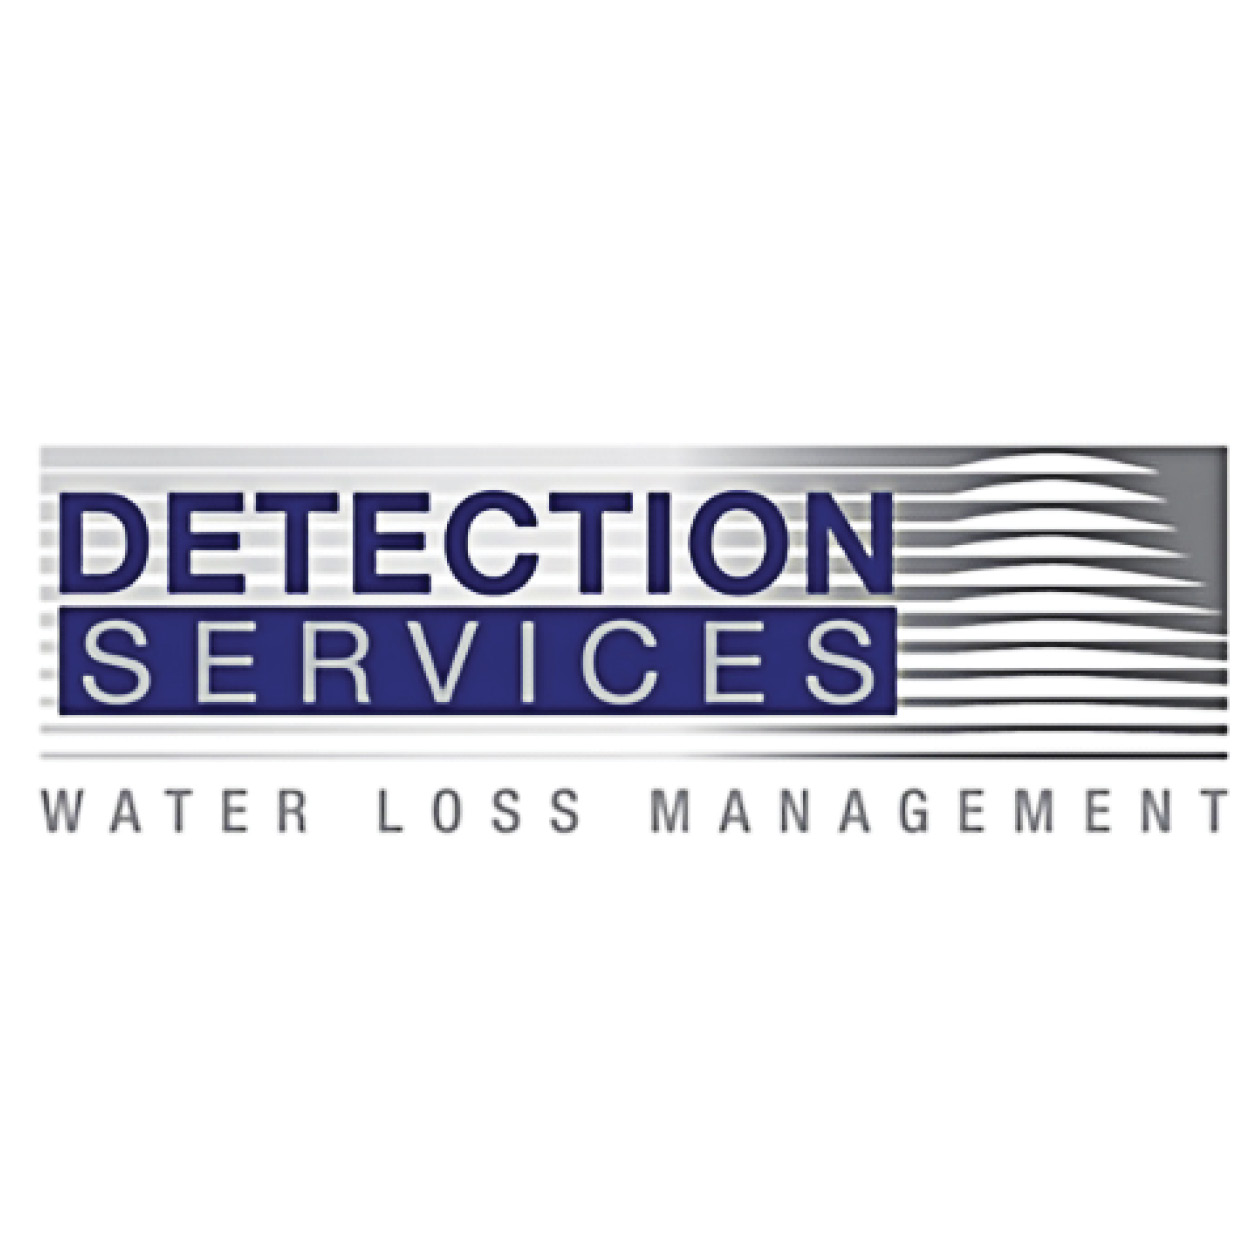 Detection Services